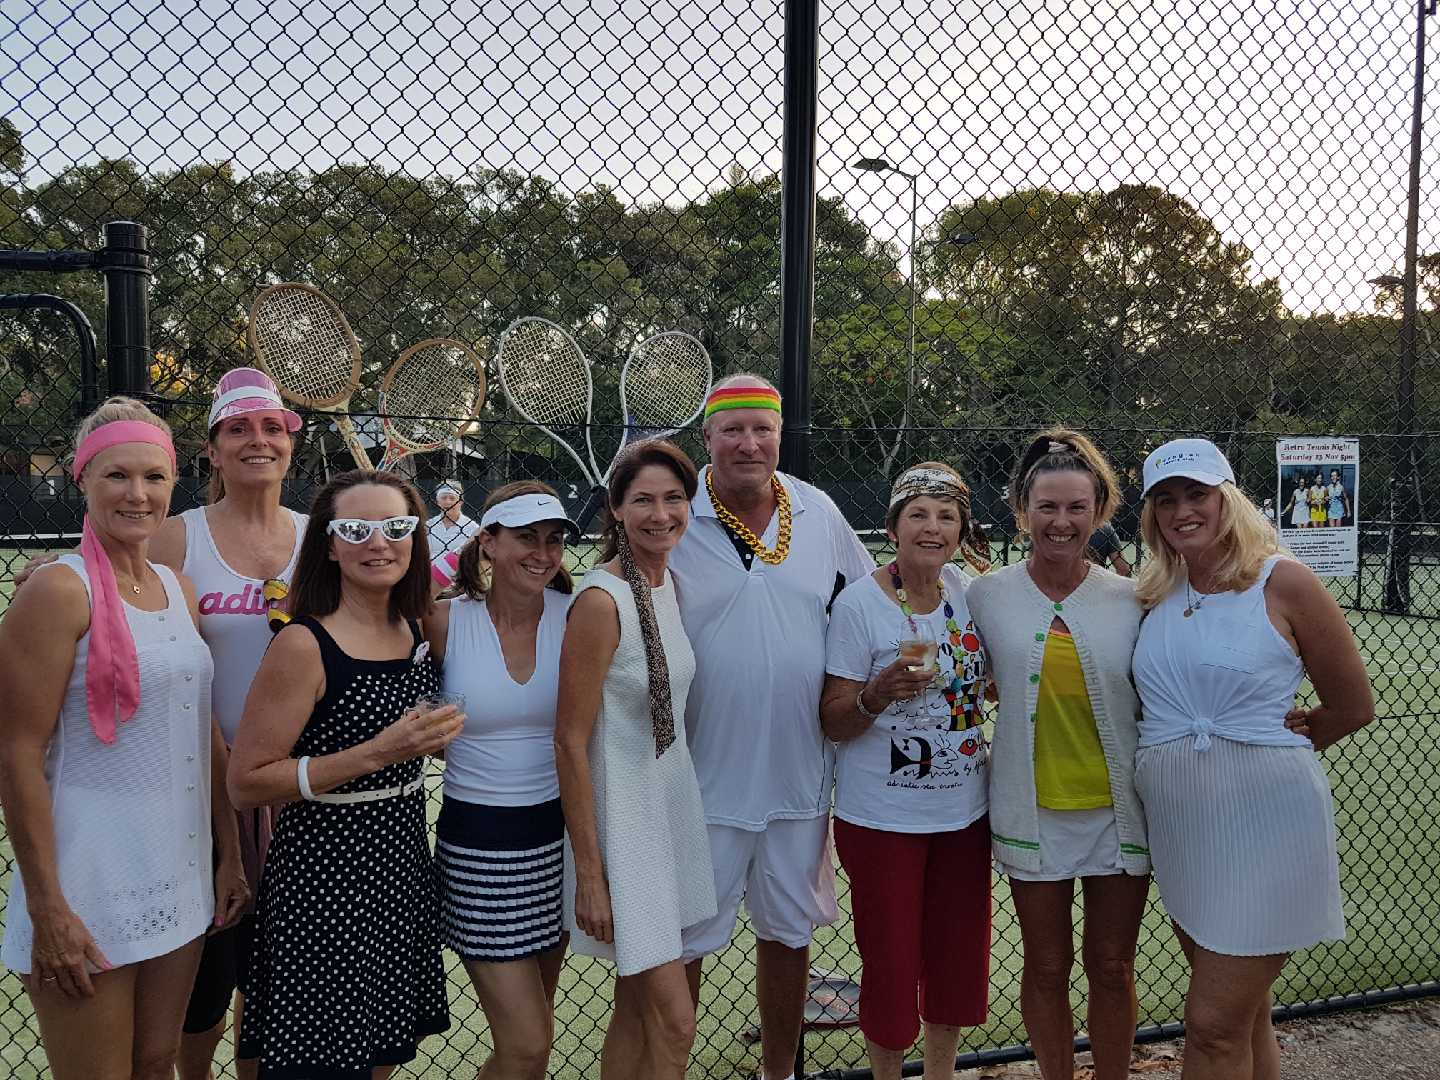 Tennis club retro night group pic